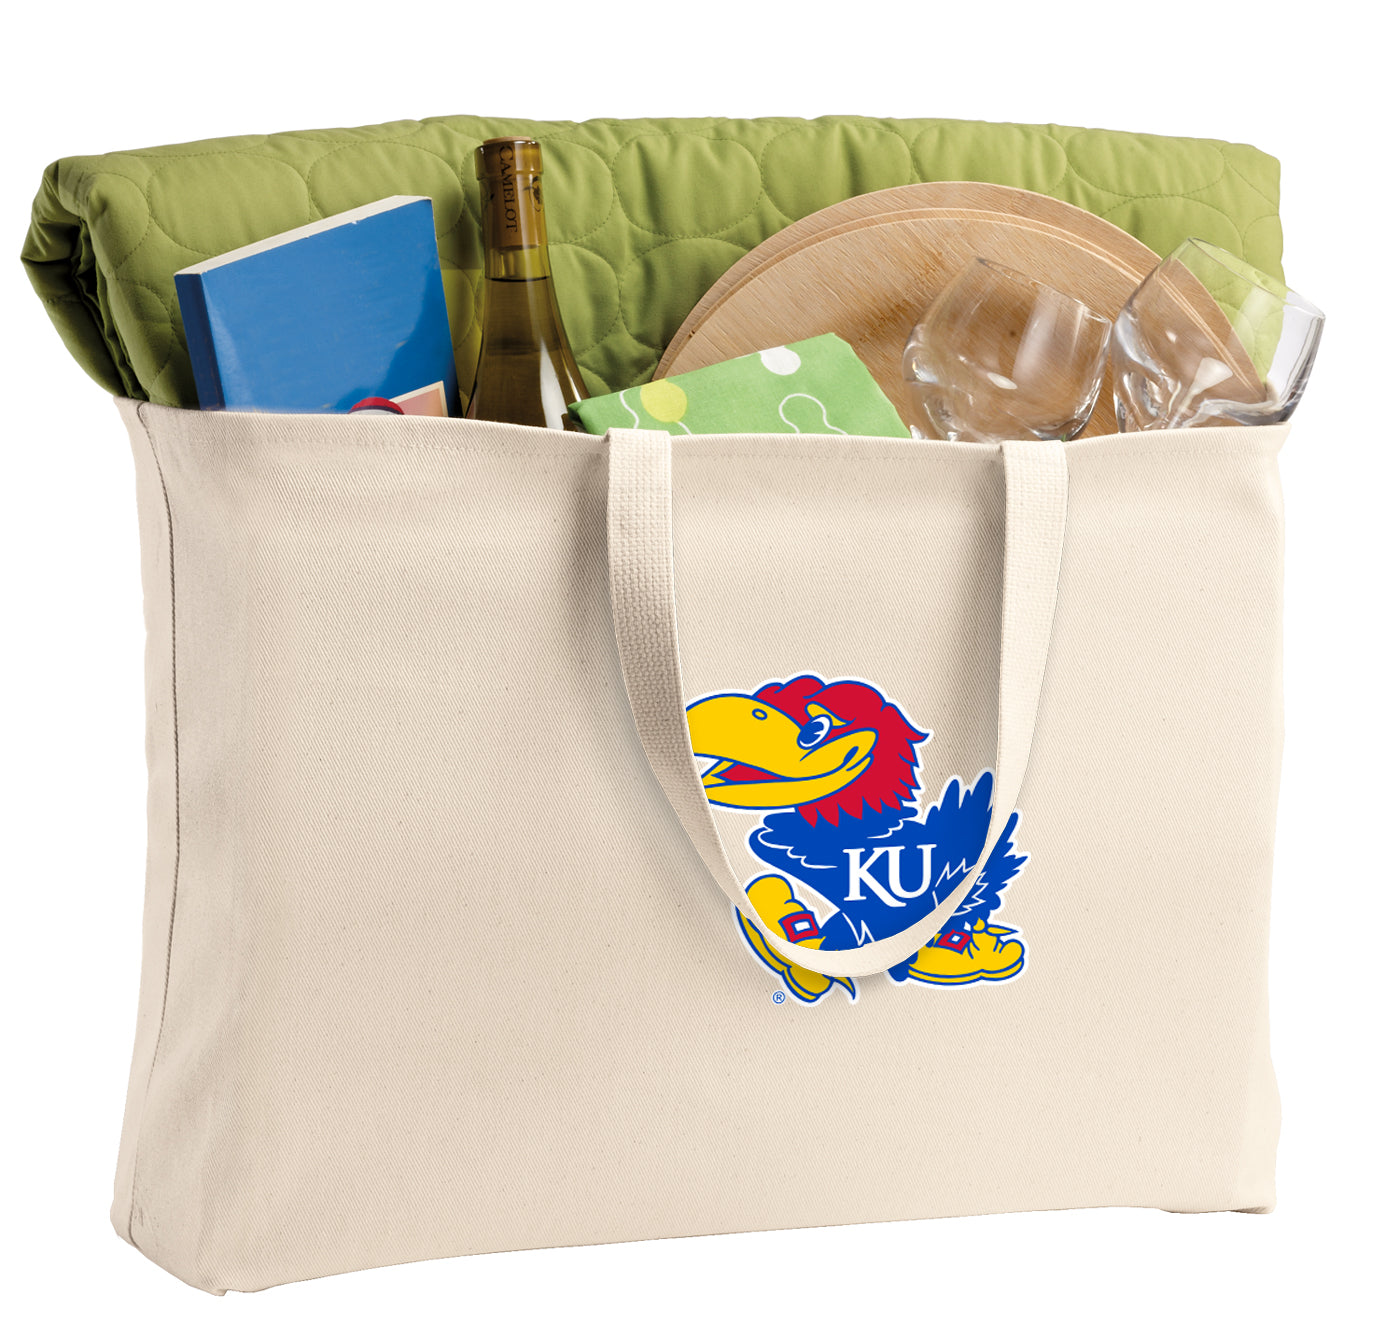 University of Kansas Large Tote Bag KU Jayhawks Jumbo Tote for Beach Pool or Travel